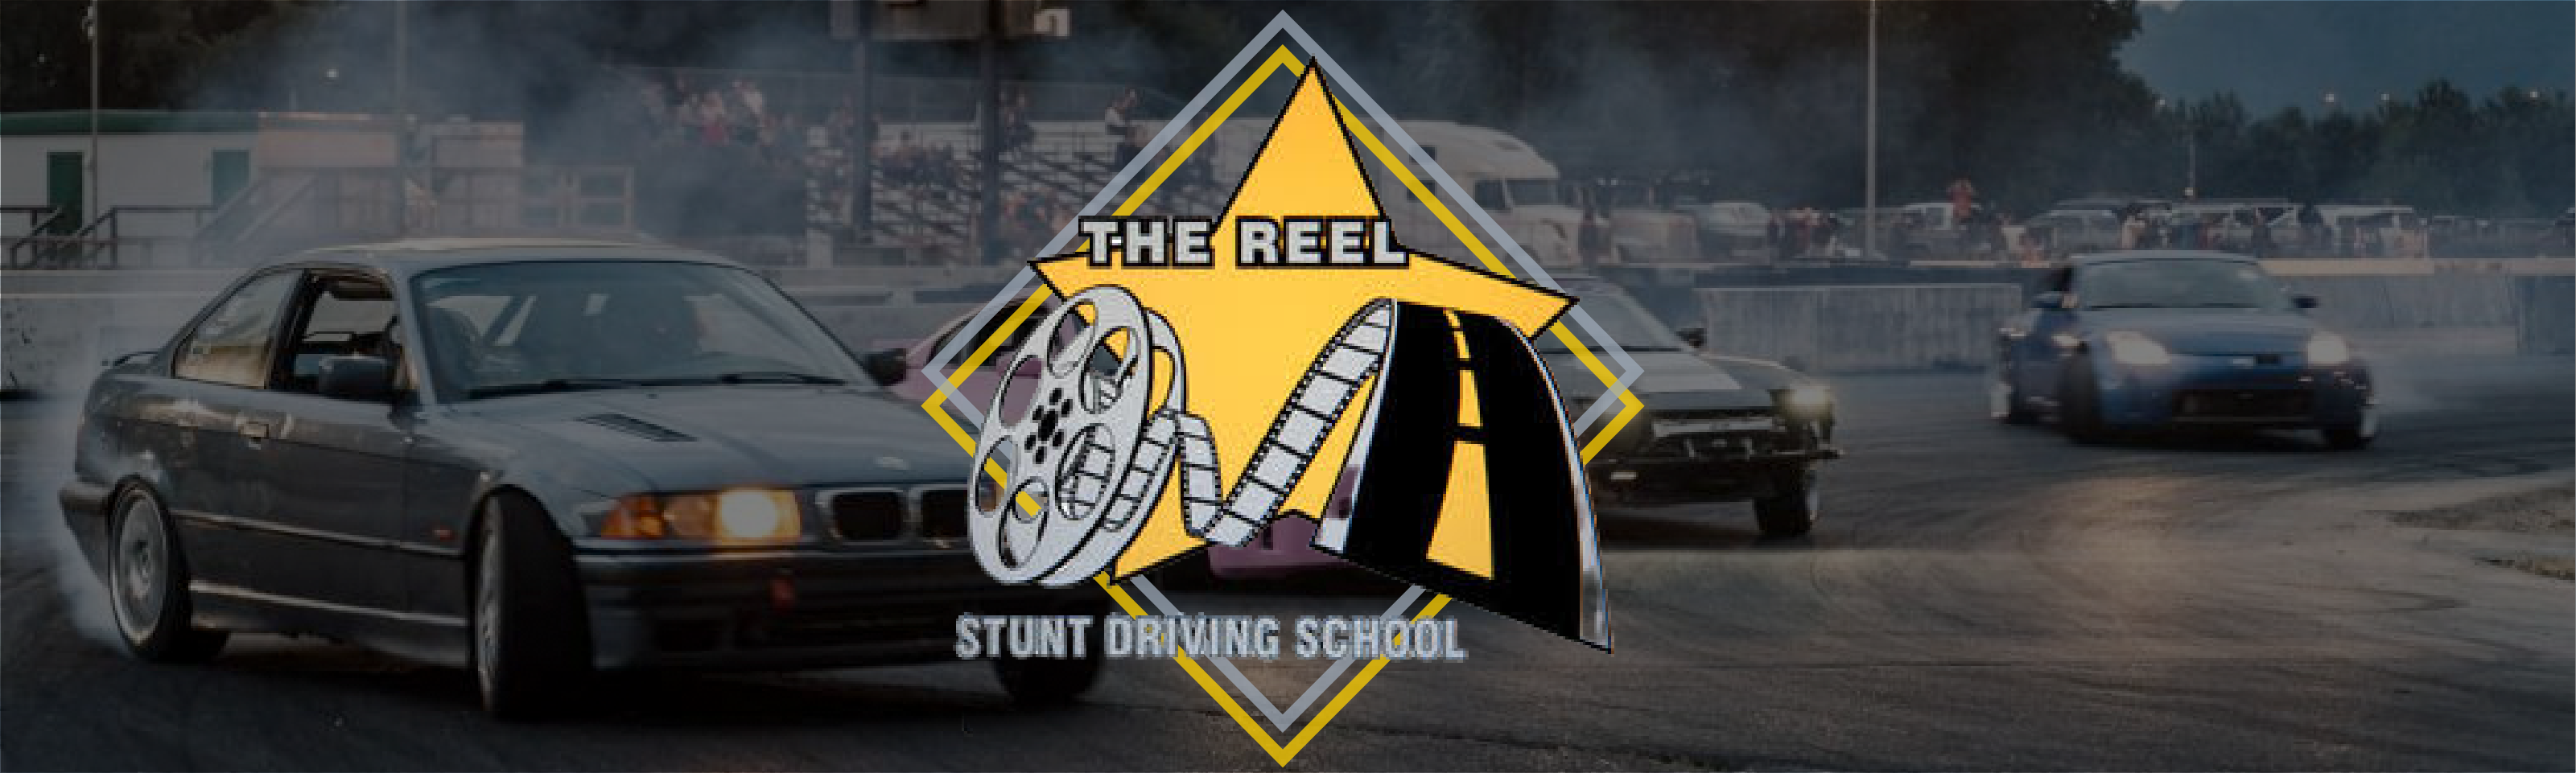 The Reel Stunt Driving School